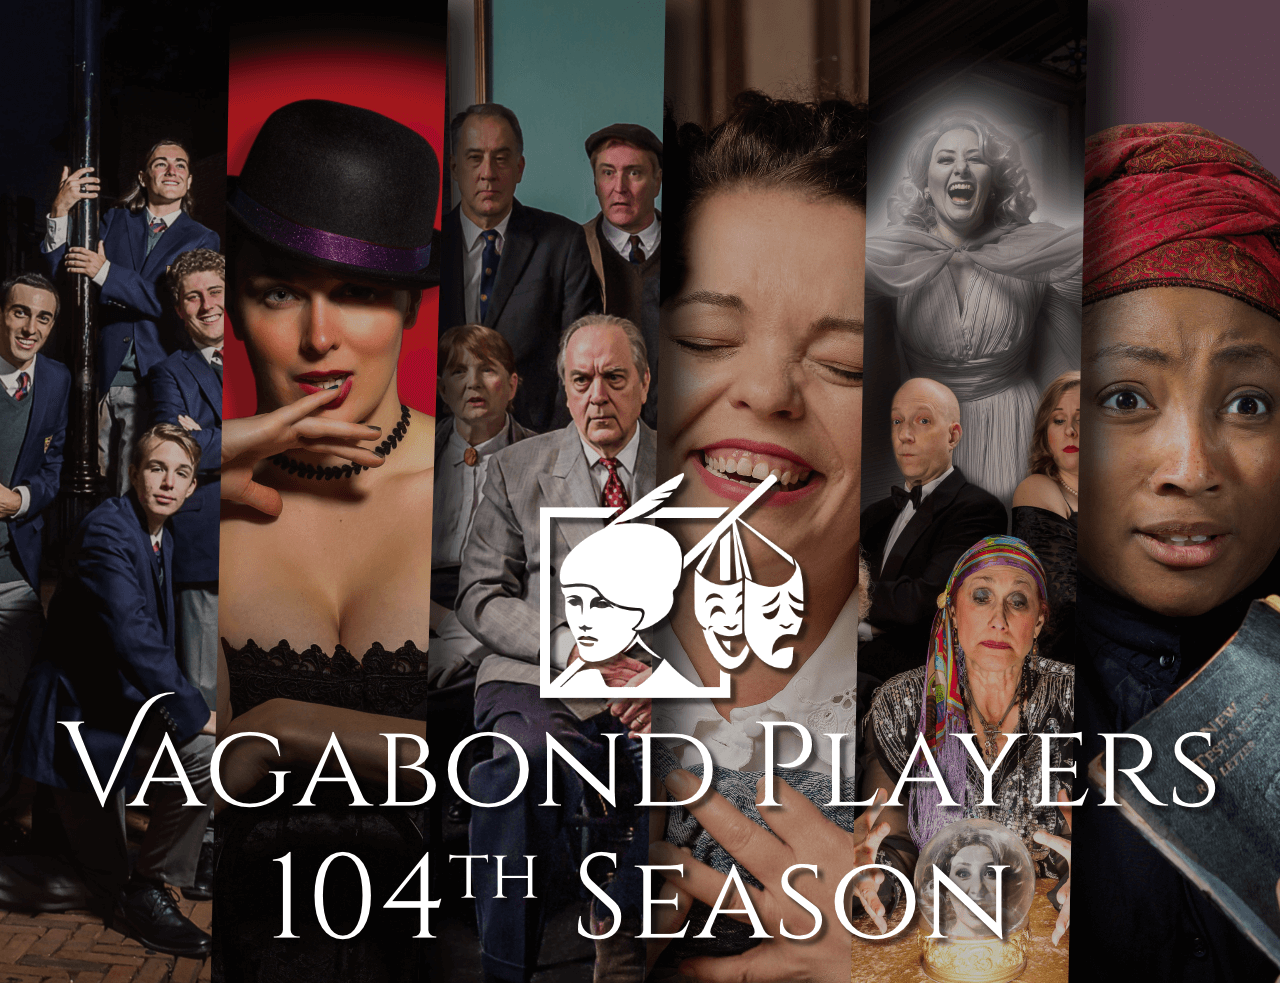 Vagabond Players 104th Season!